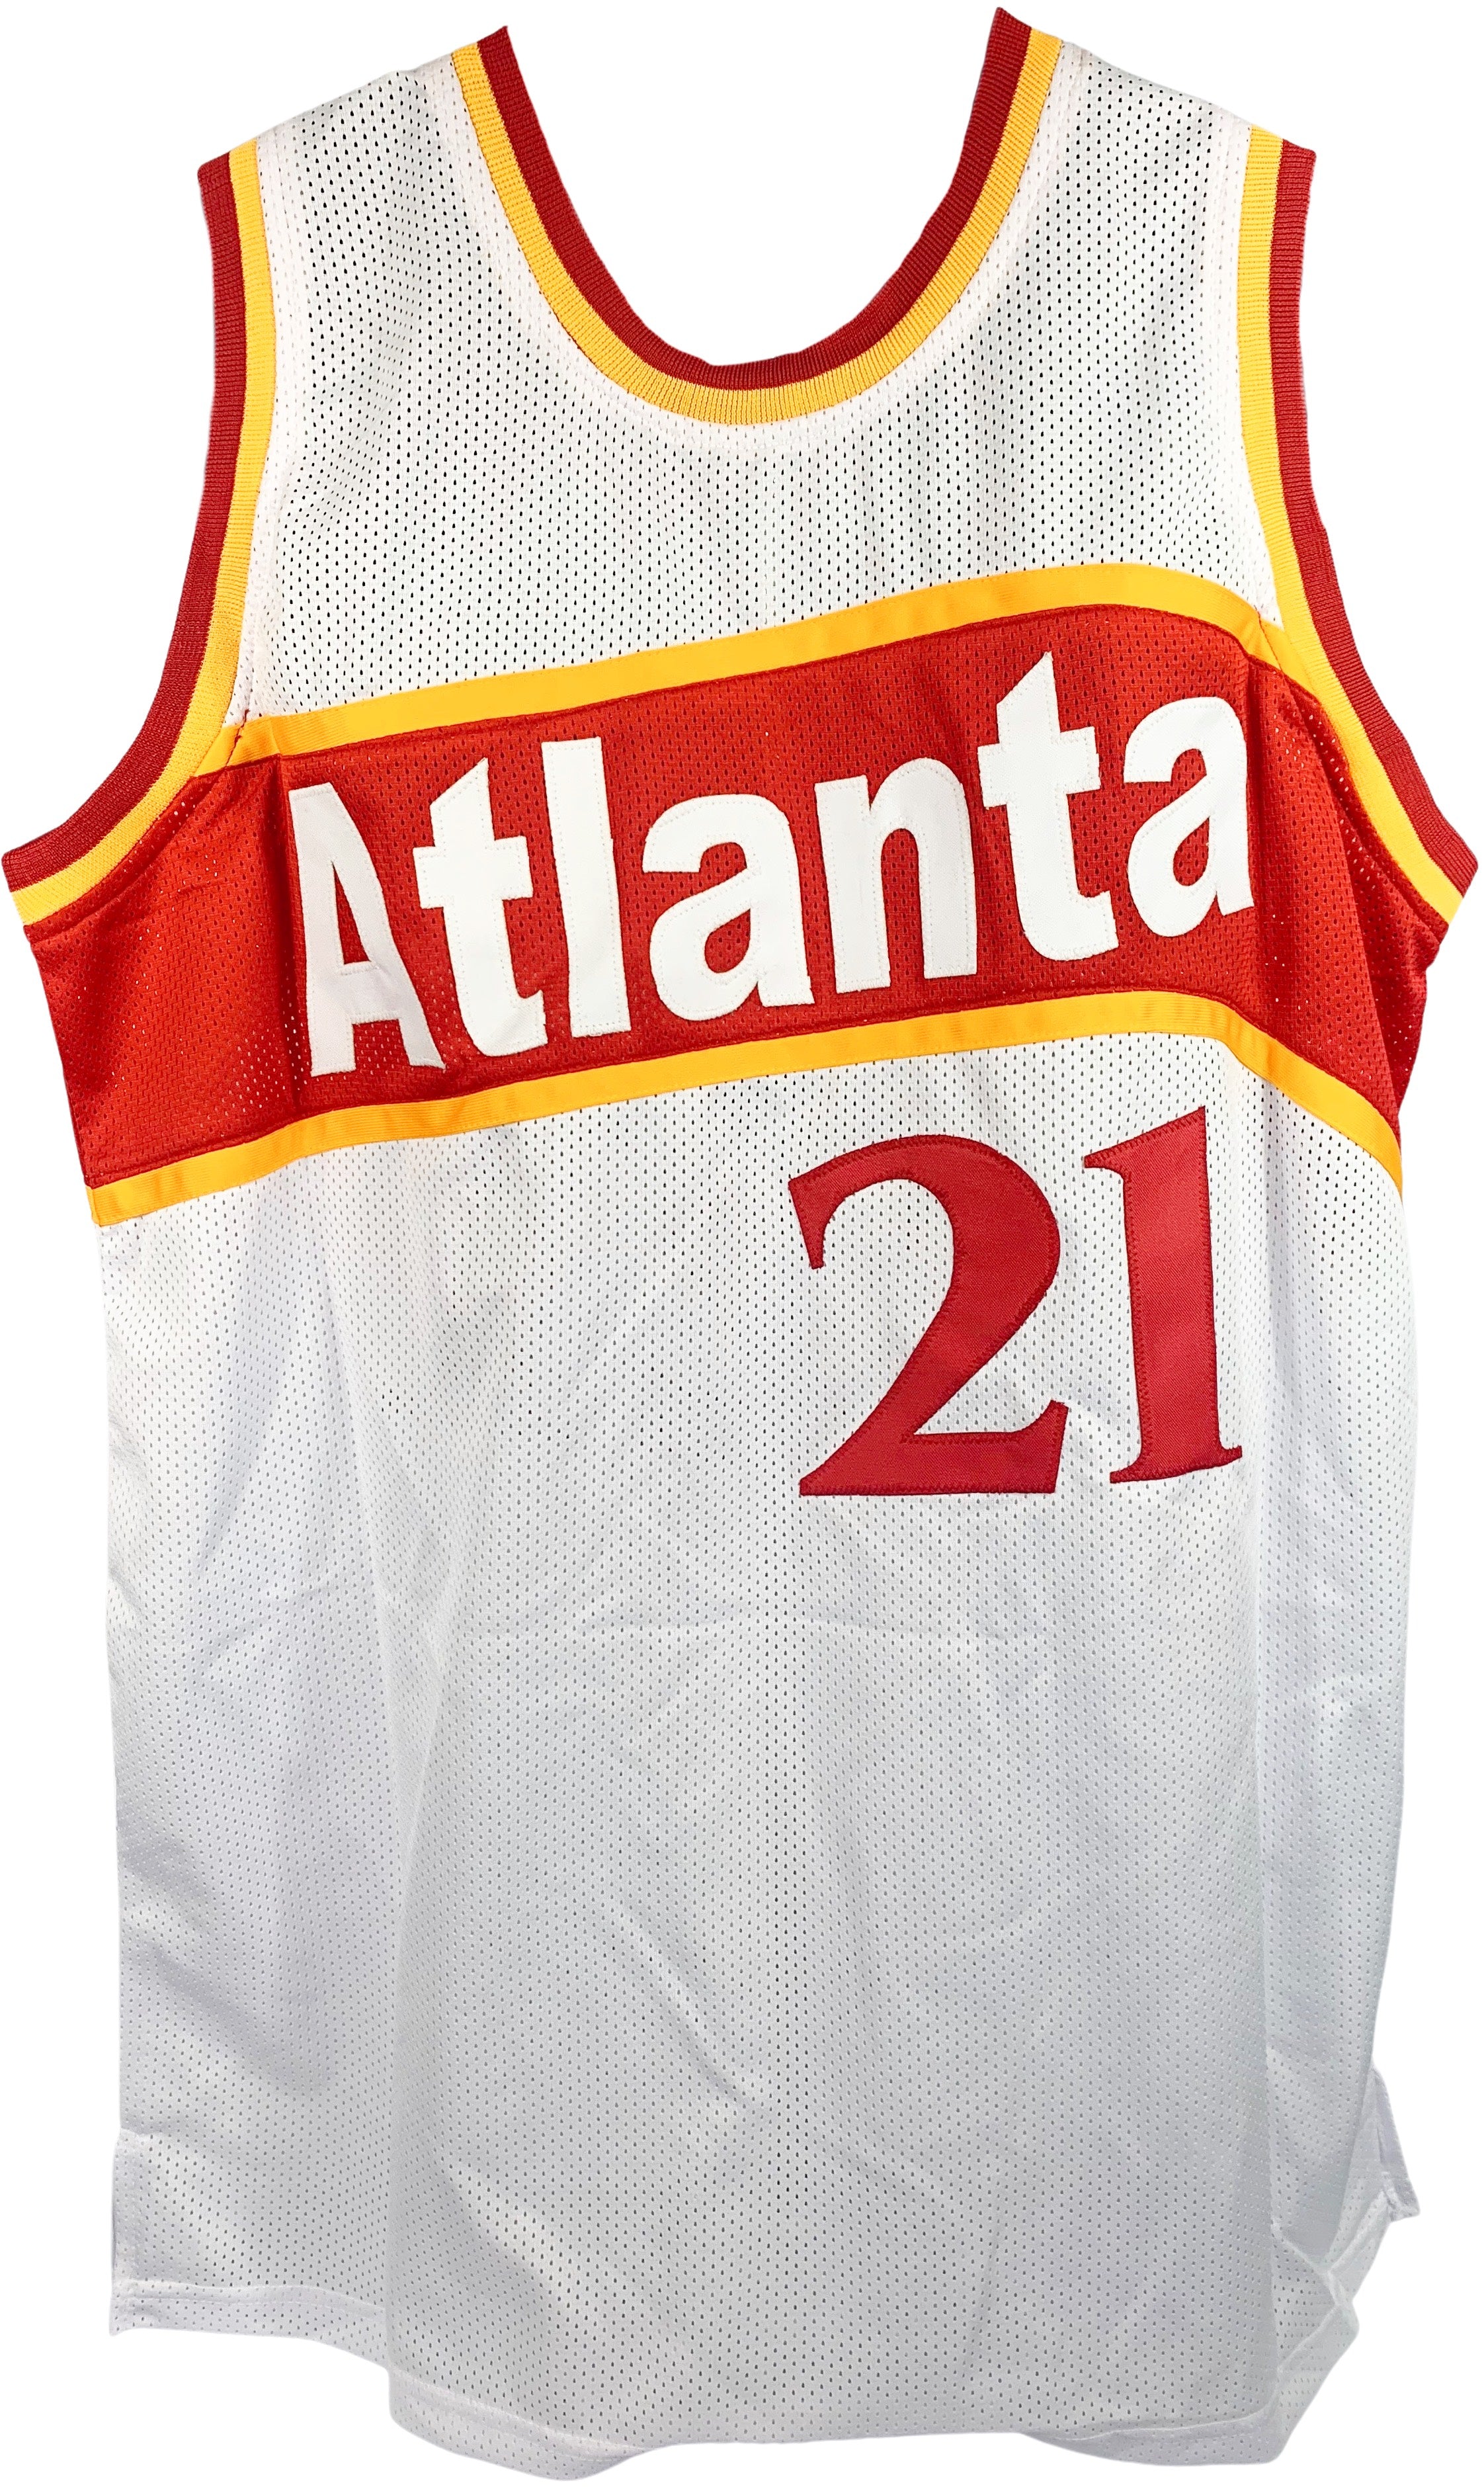 Dominique Wilkins autographed signed jersey NBA Atlanta Hawks PSA